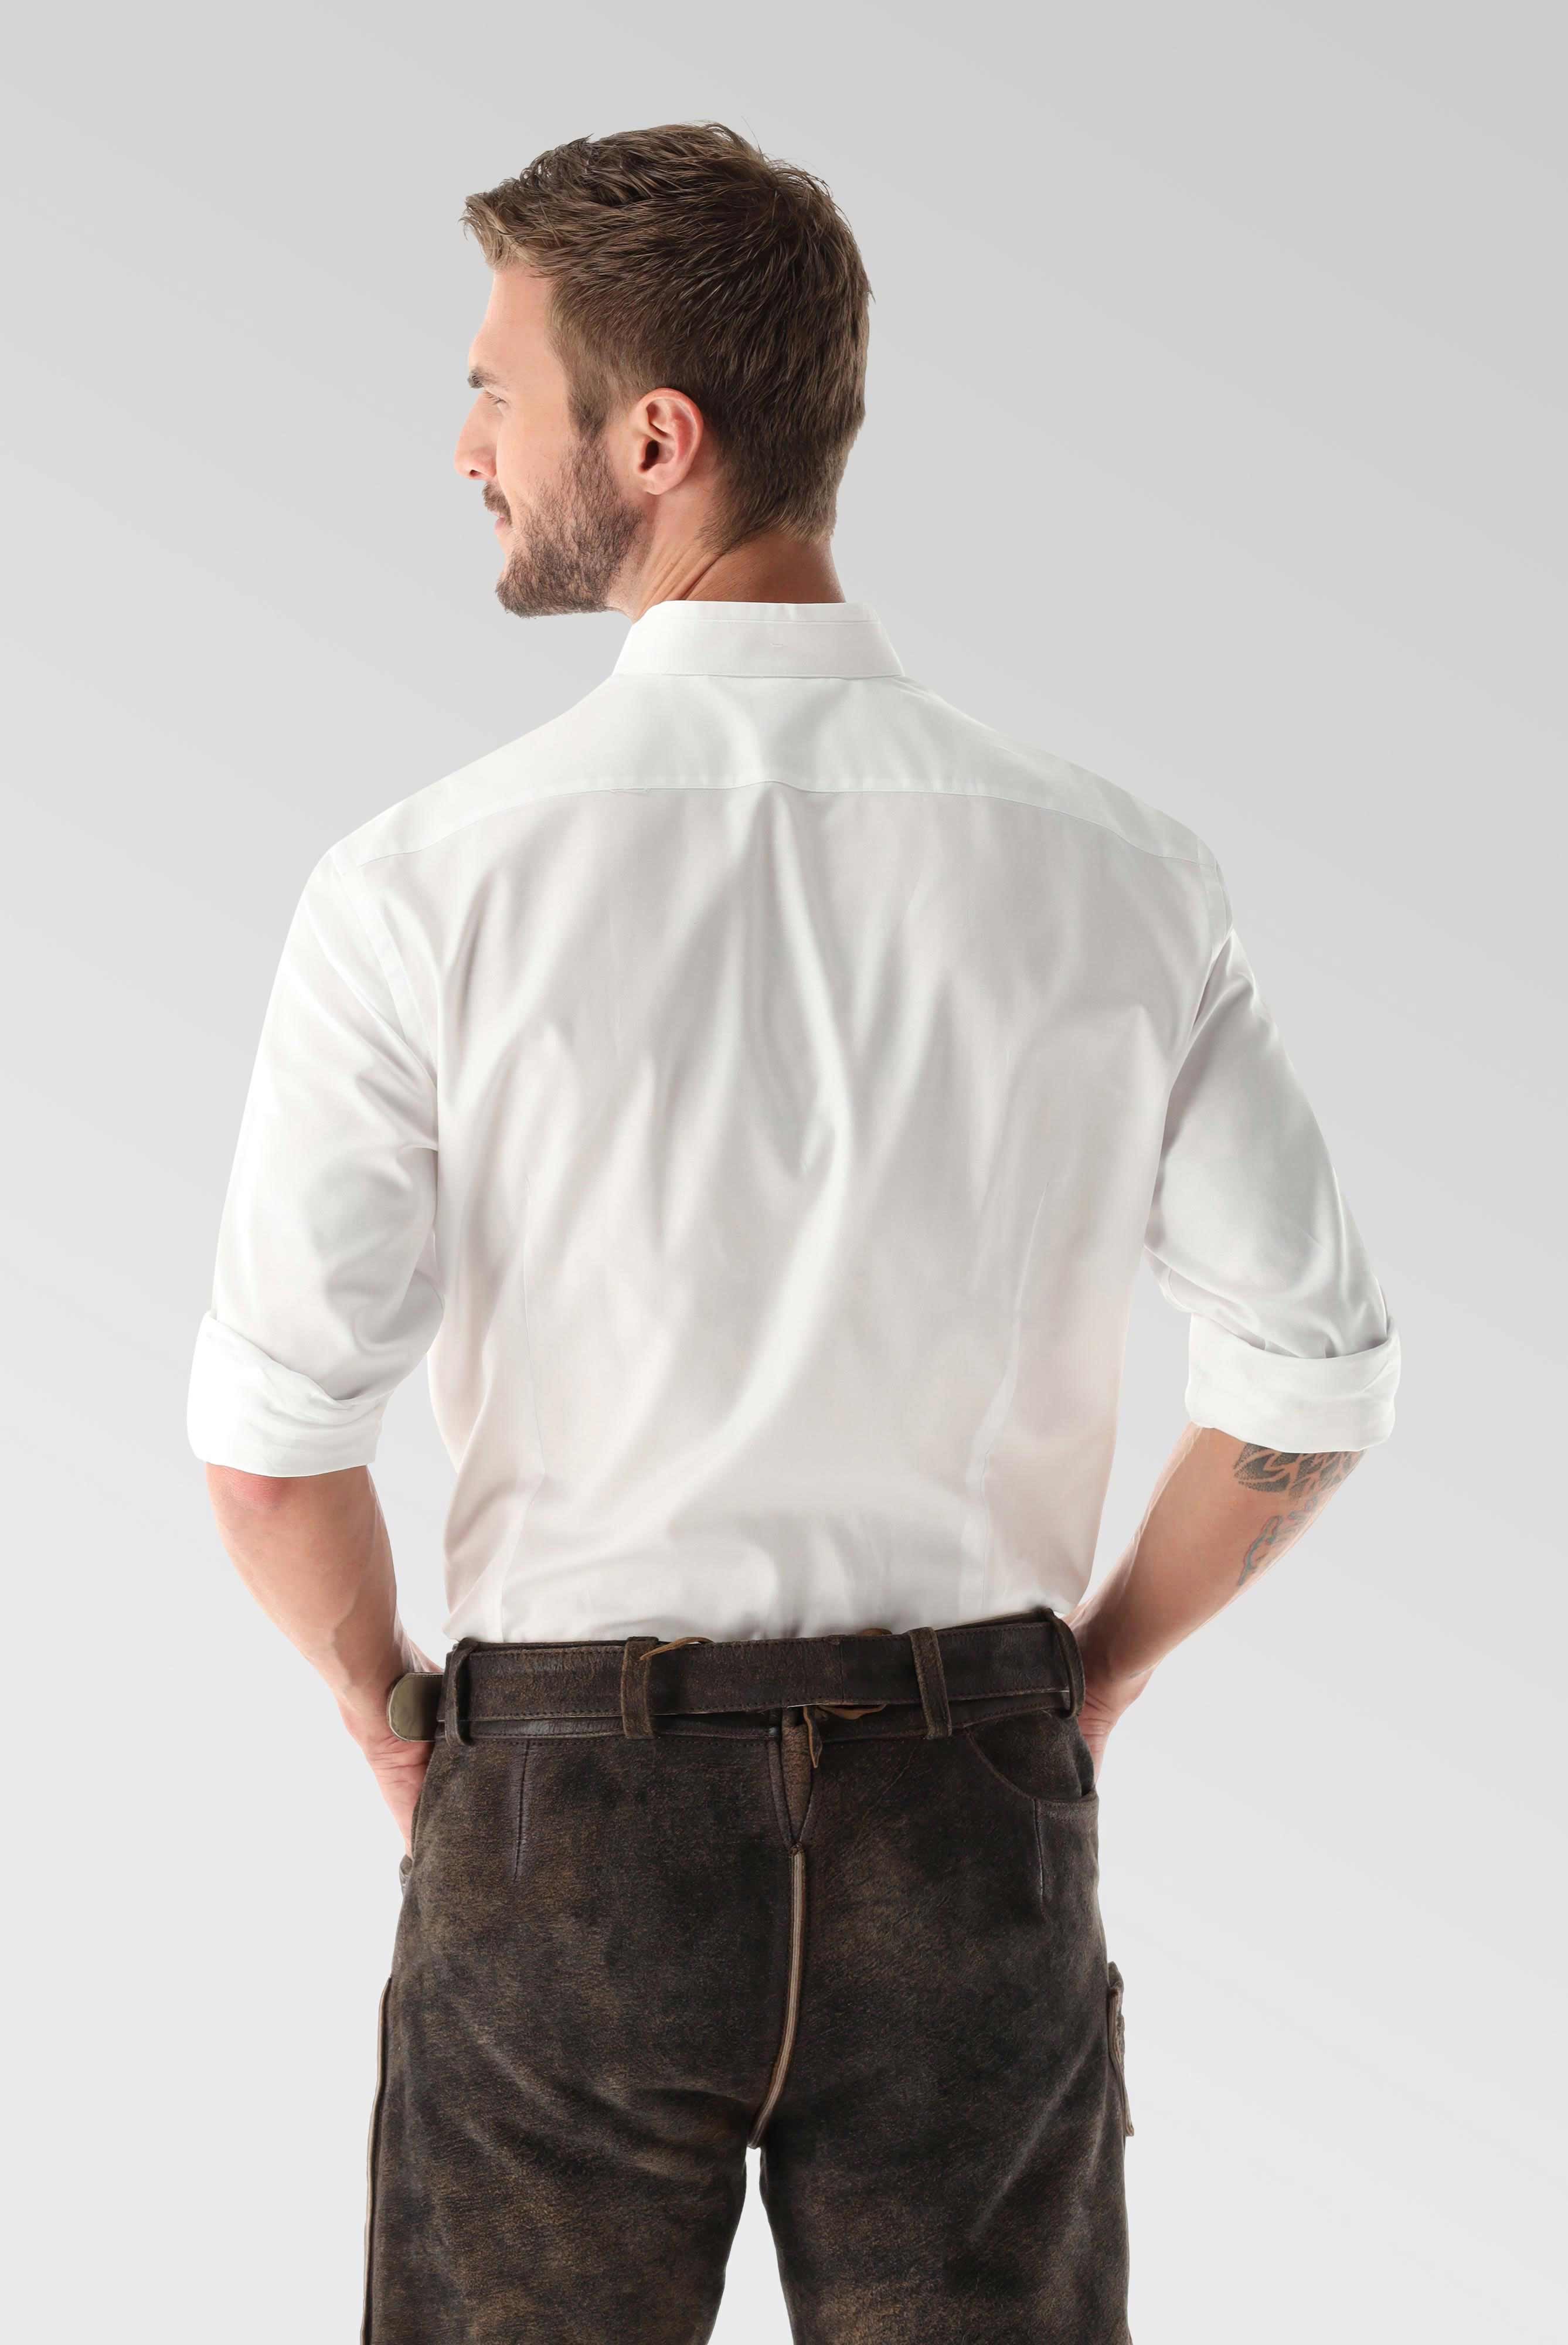 Festliche Hemden+Oxford Traditional Shirt Tailor Fit+20.2081.8Q.150251.000.38